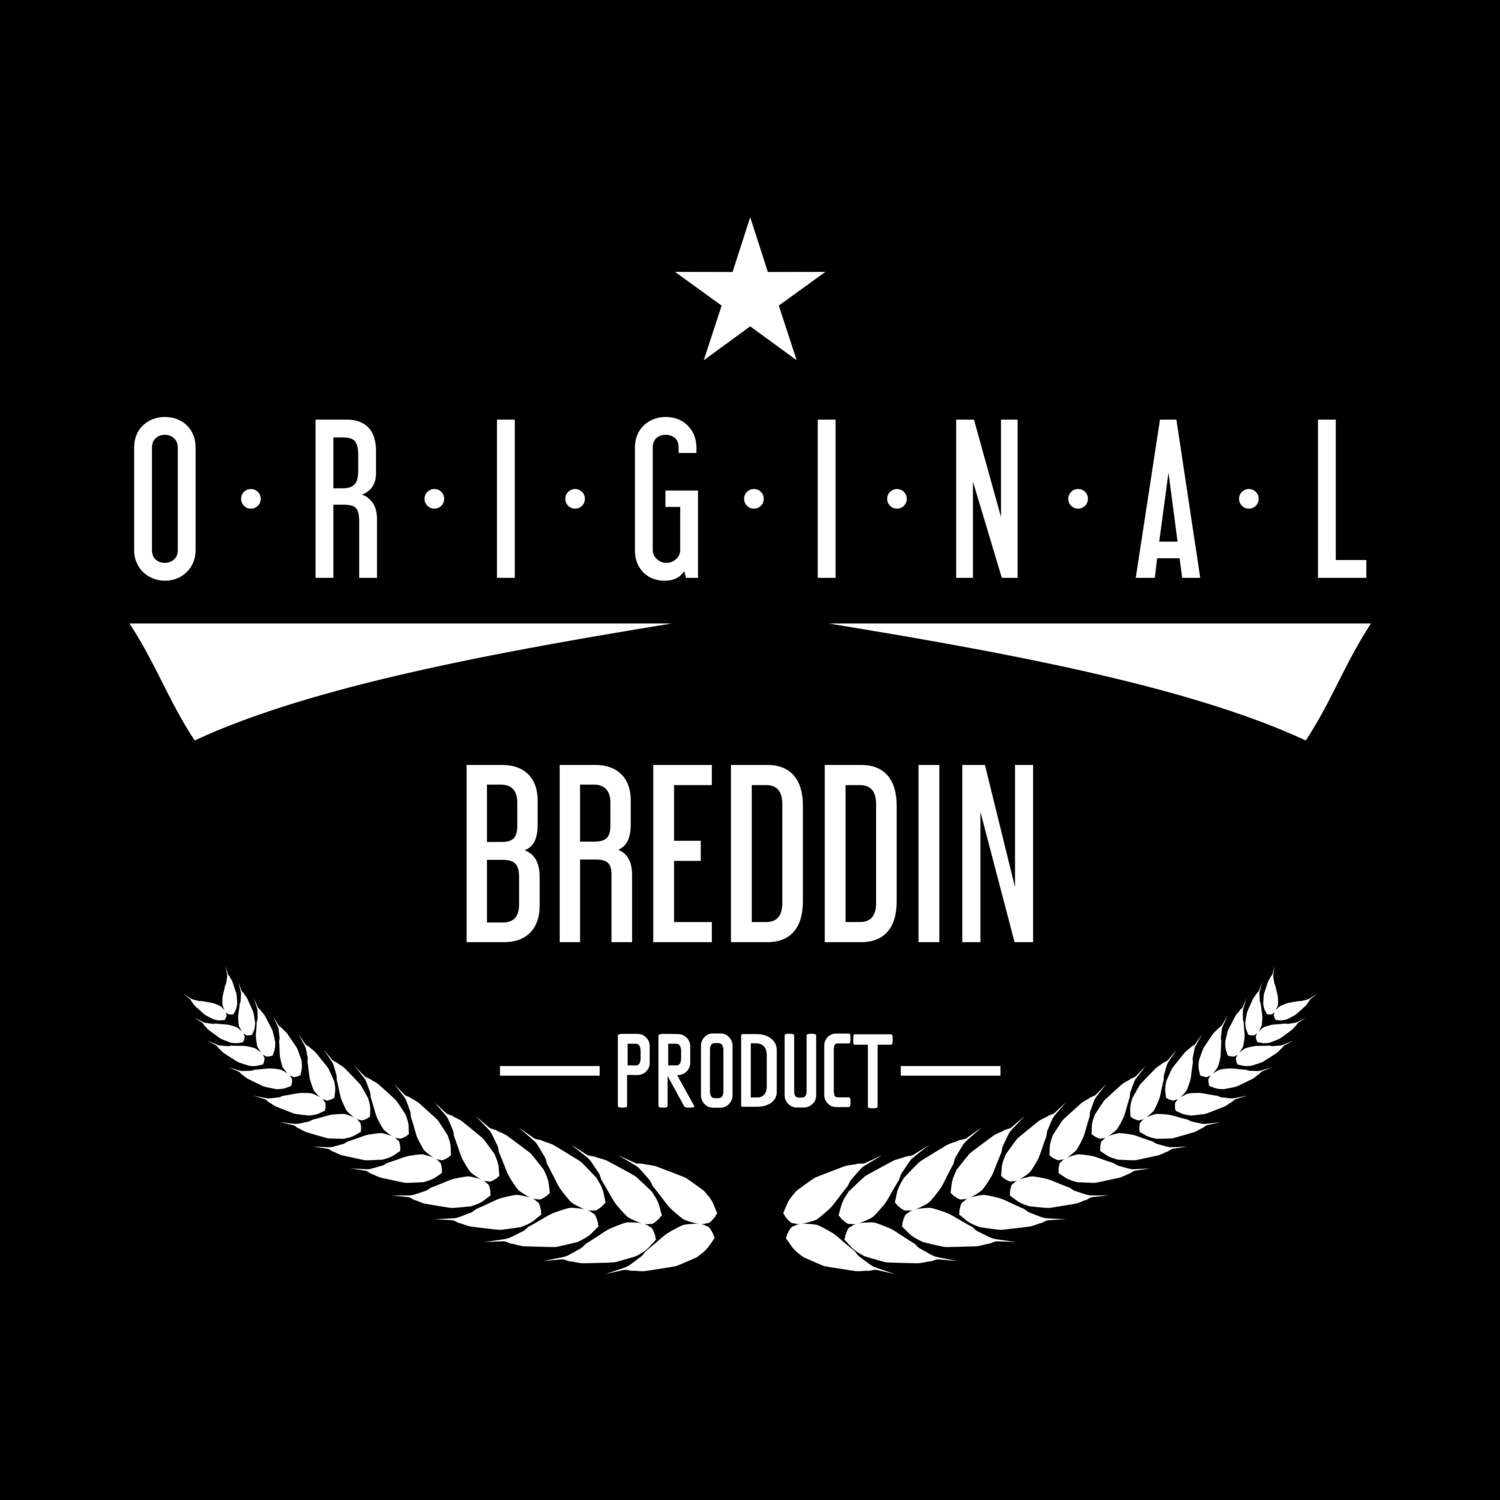 Breddin T-Shirt »Original Product«